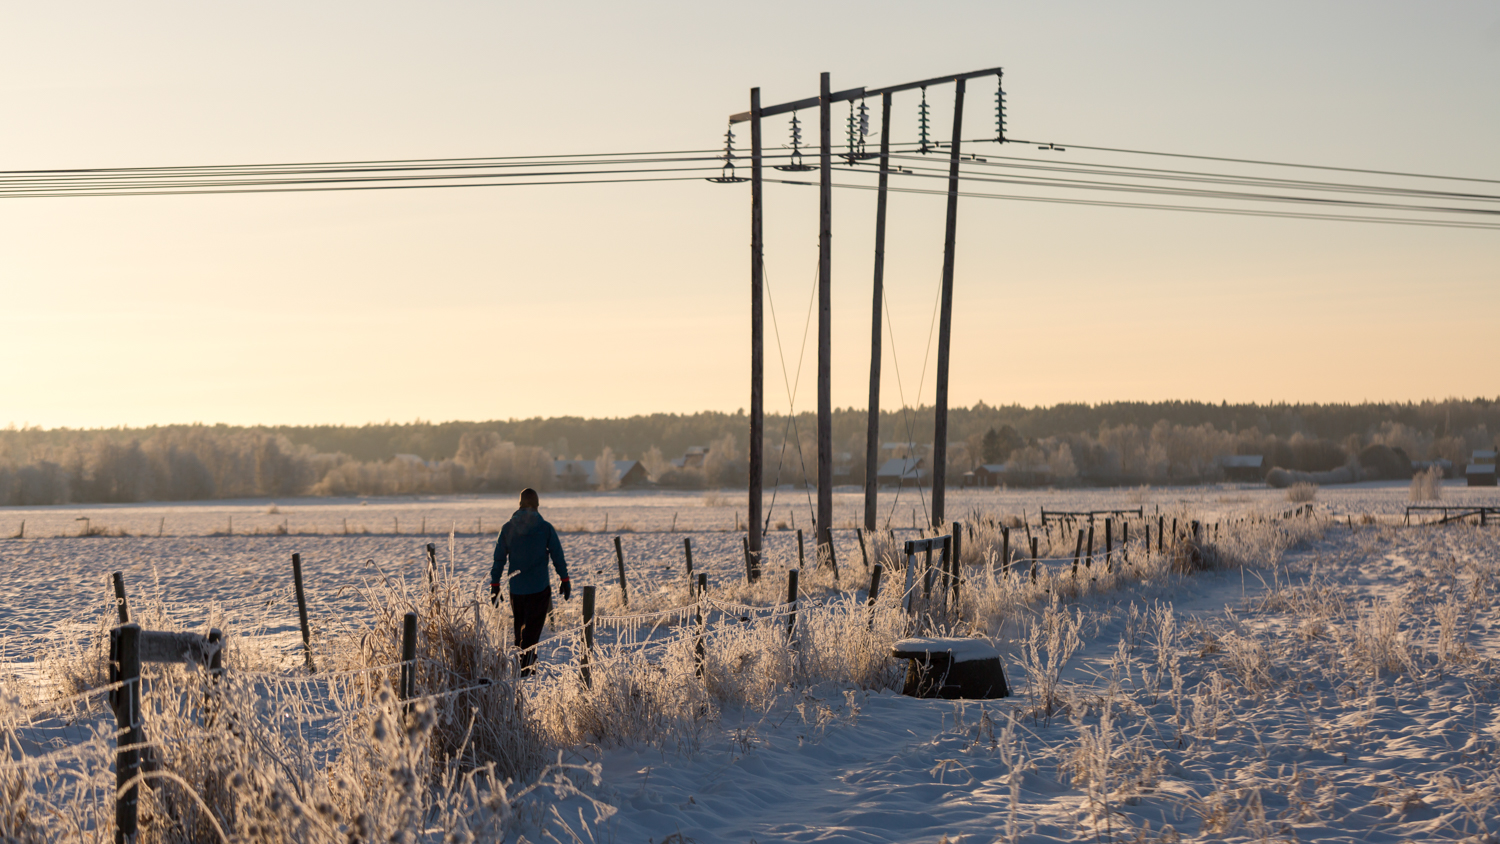 Mann som går tur under en strømledning på et jorde på vinteren